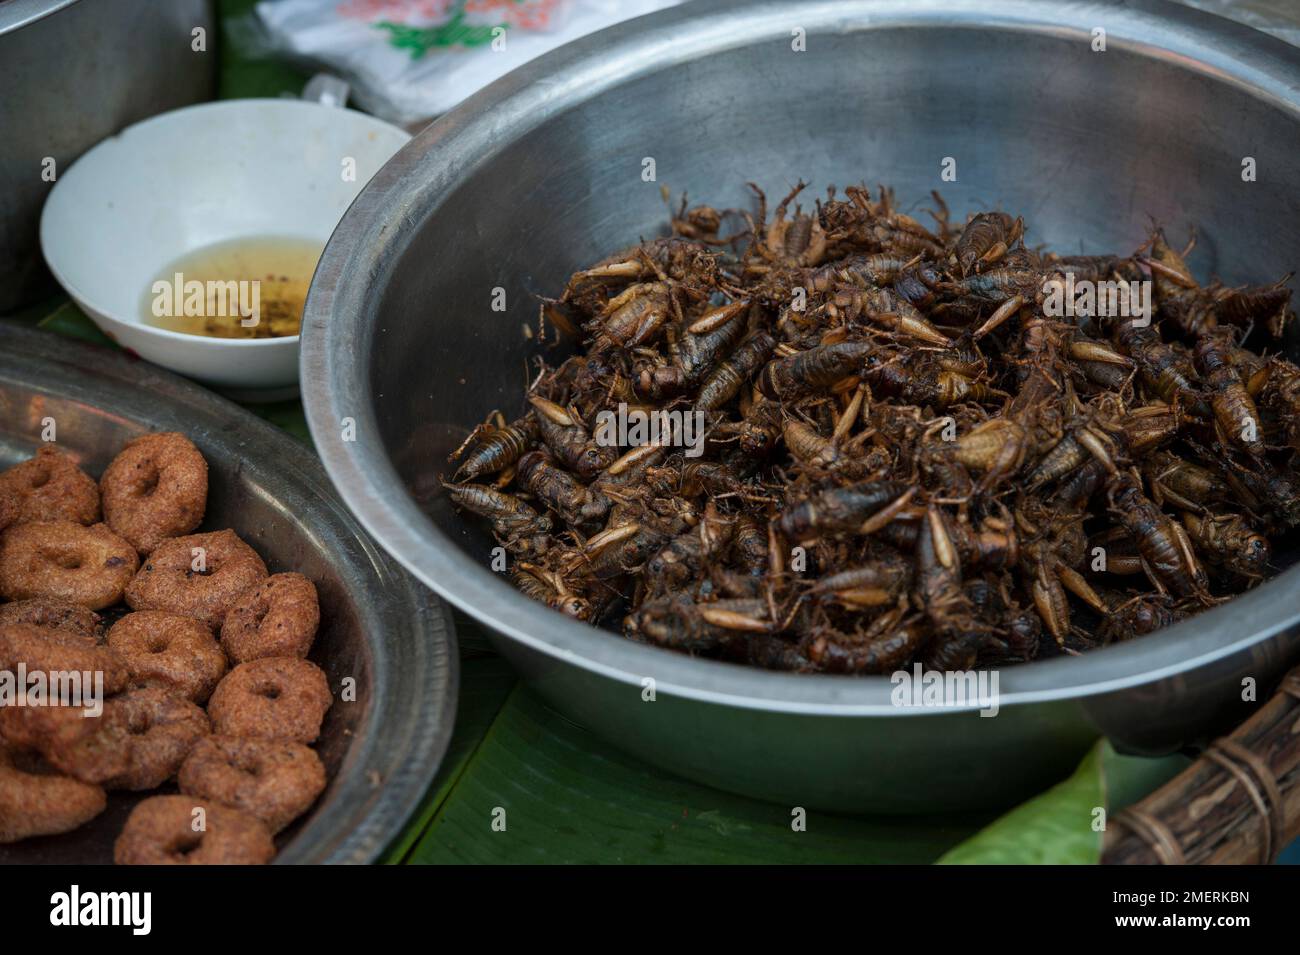 Myanmar, Mandalay region, Mandalay, Zegyo Market, street food - crickets Stock Photo